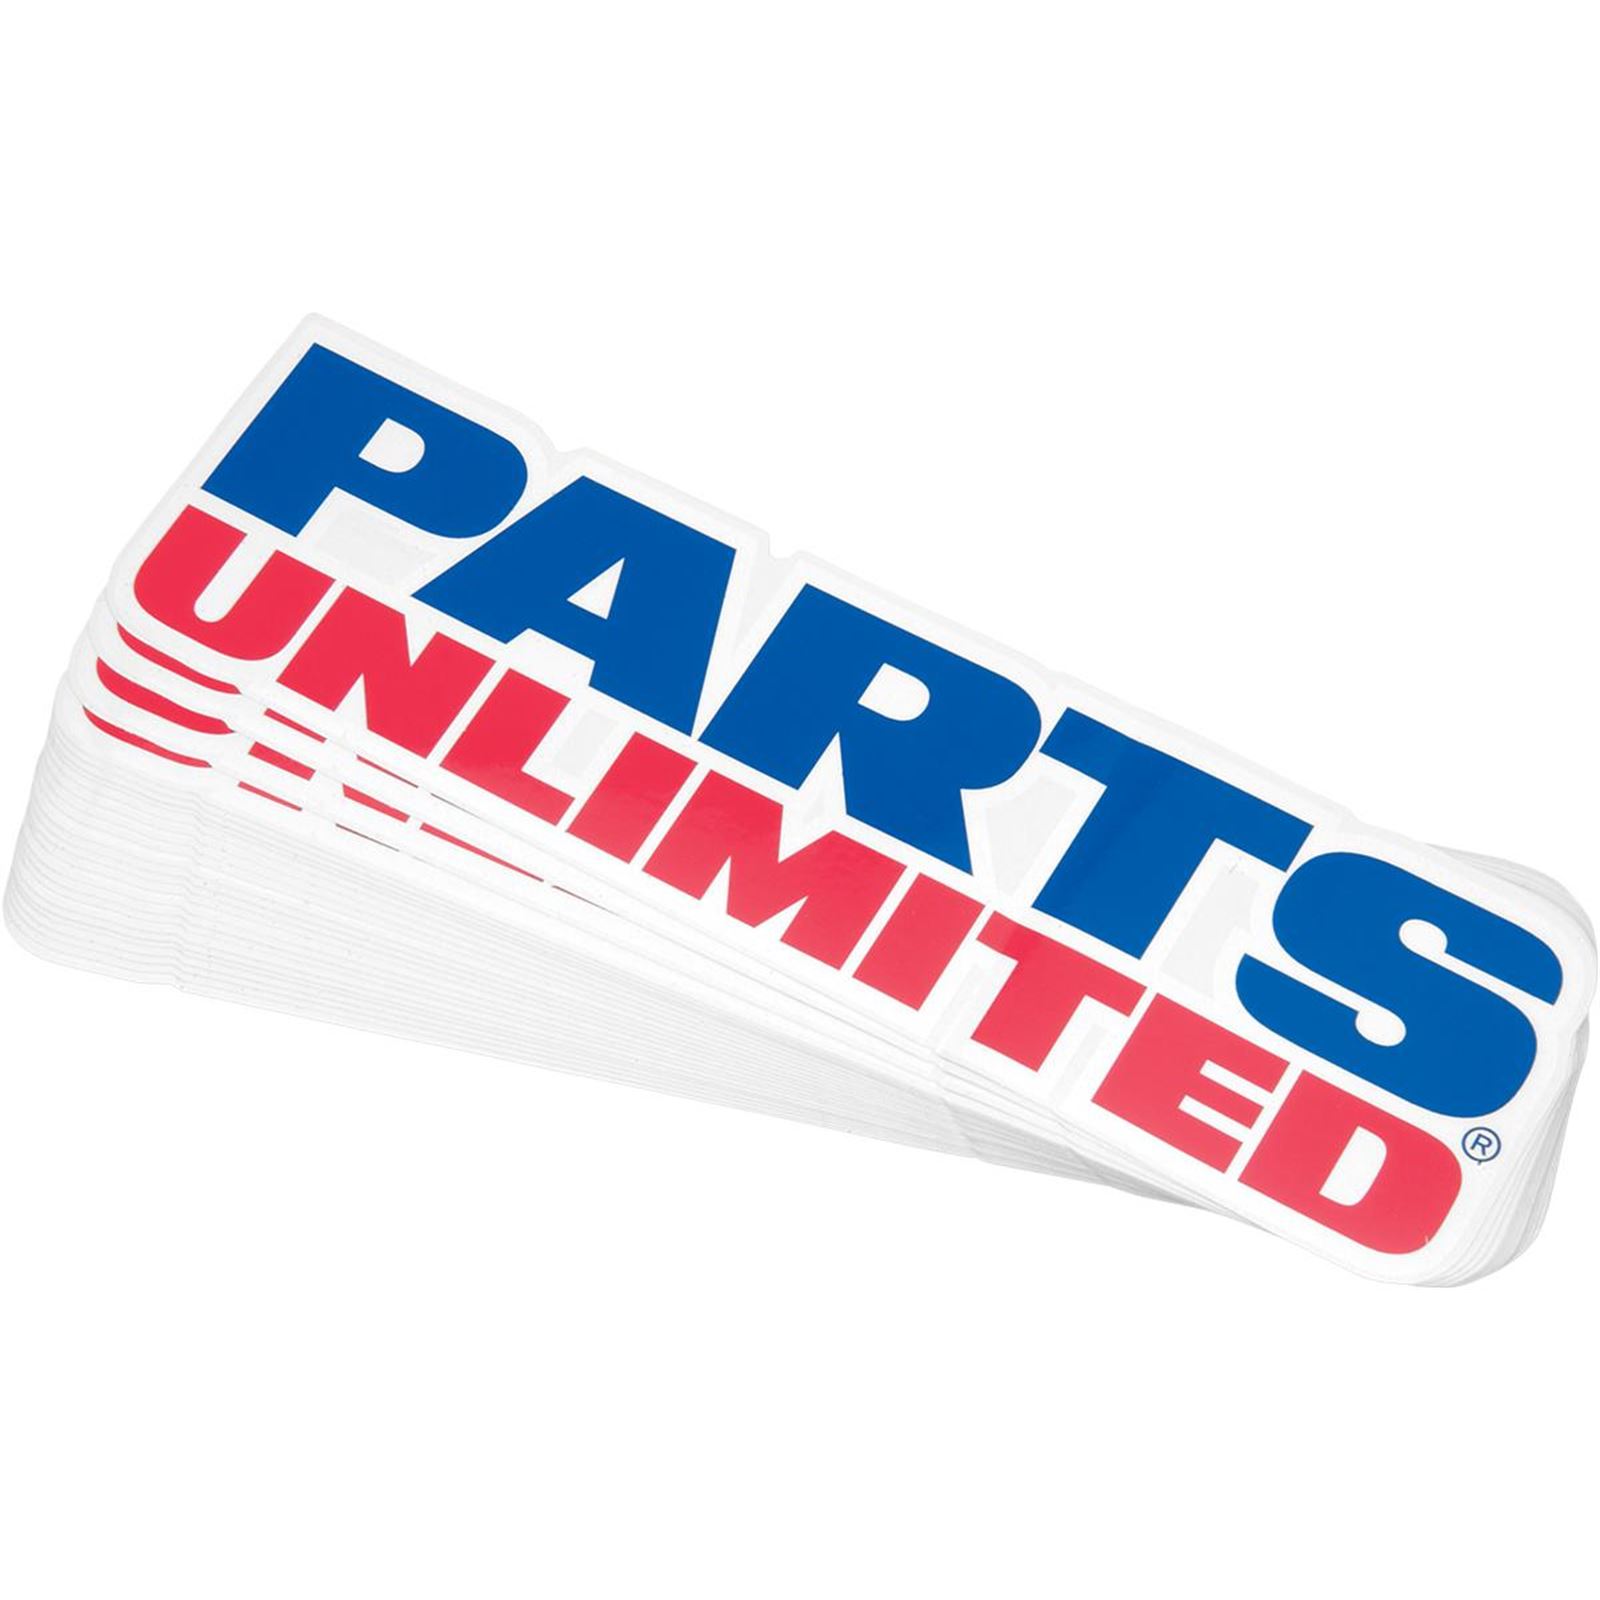 Parts Unlimited Decals - 16"